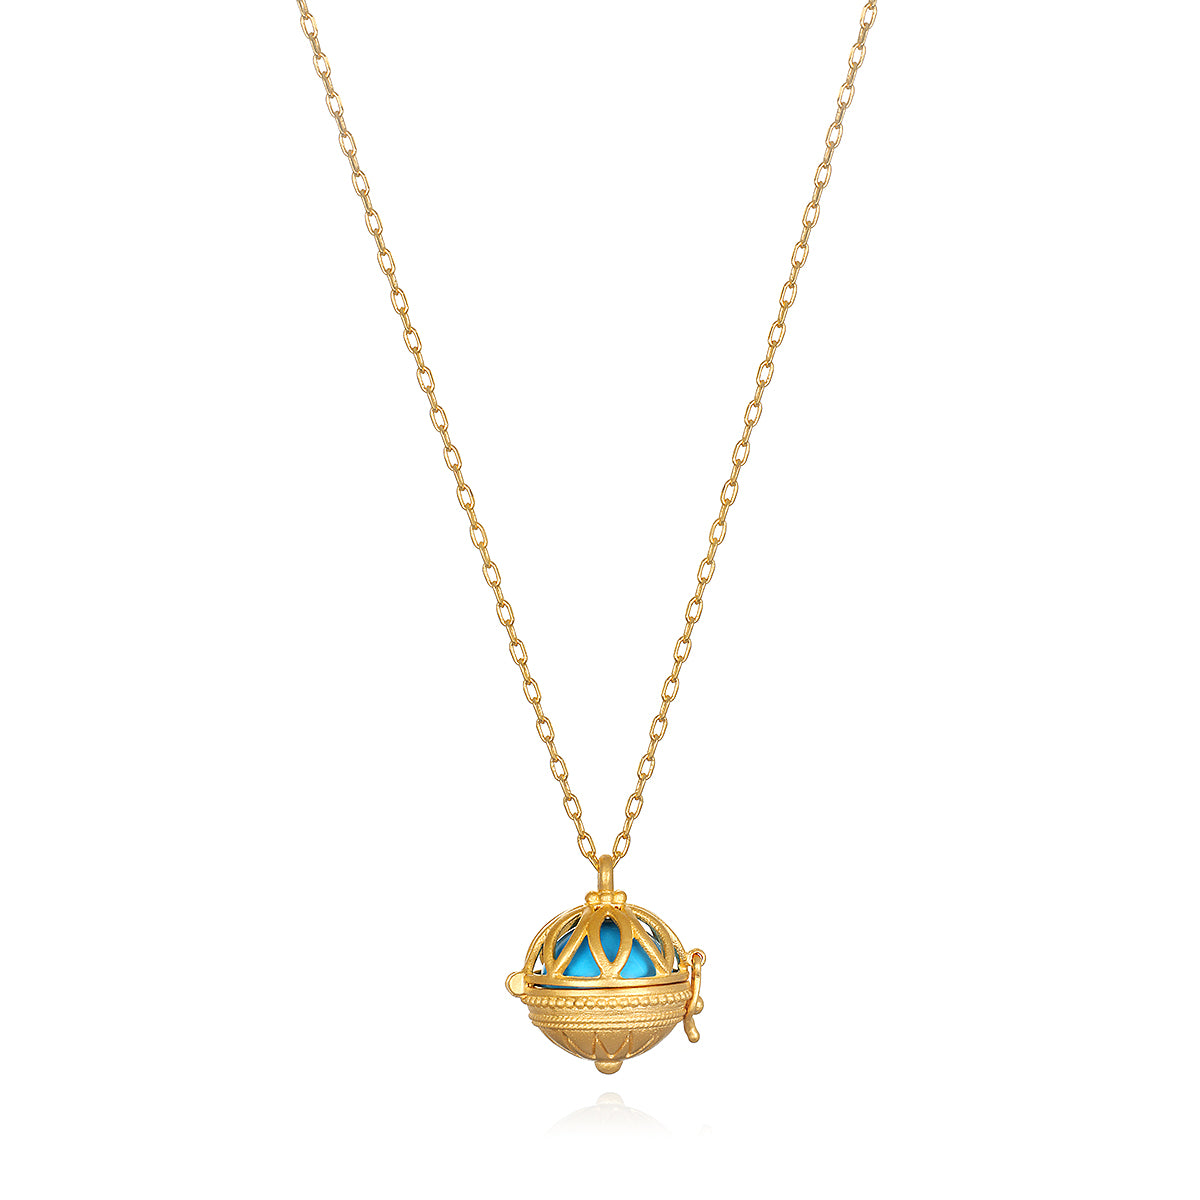 The Amulet of Truth Gemstone Locket Necklace